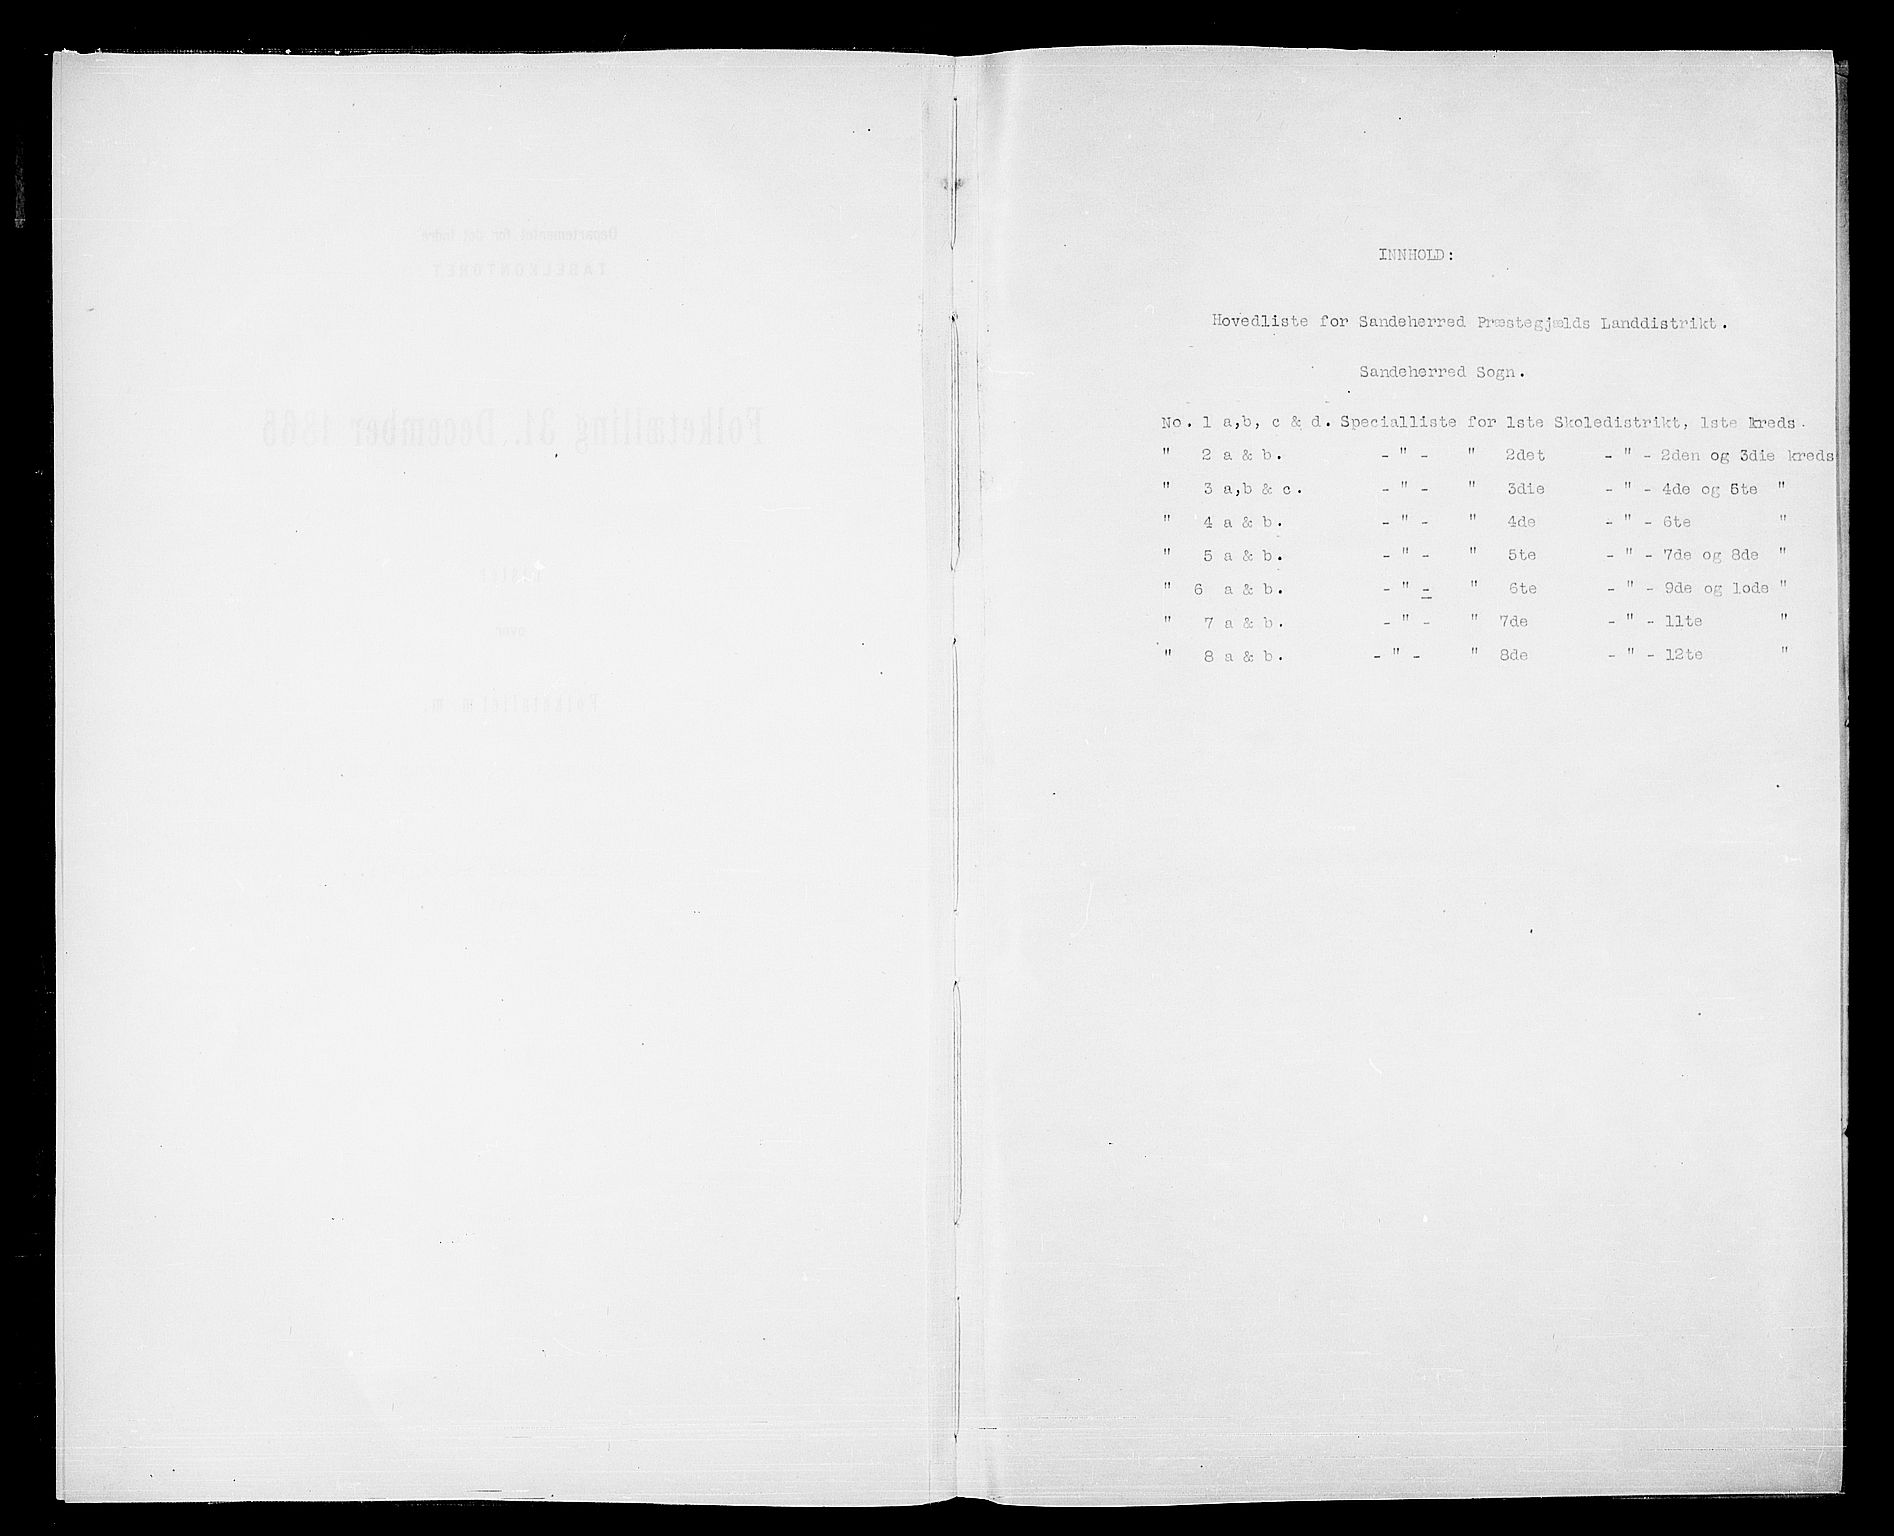 RA, Folketelling 1865 for 0724L Sandeherred prestegjeld, Sandeherred sokn, 1865, s. 4